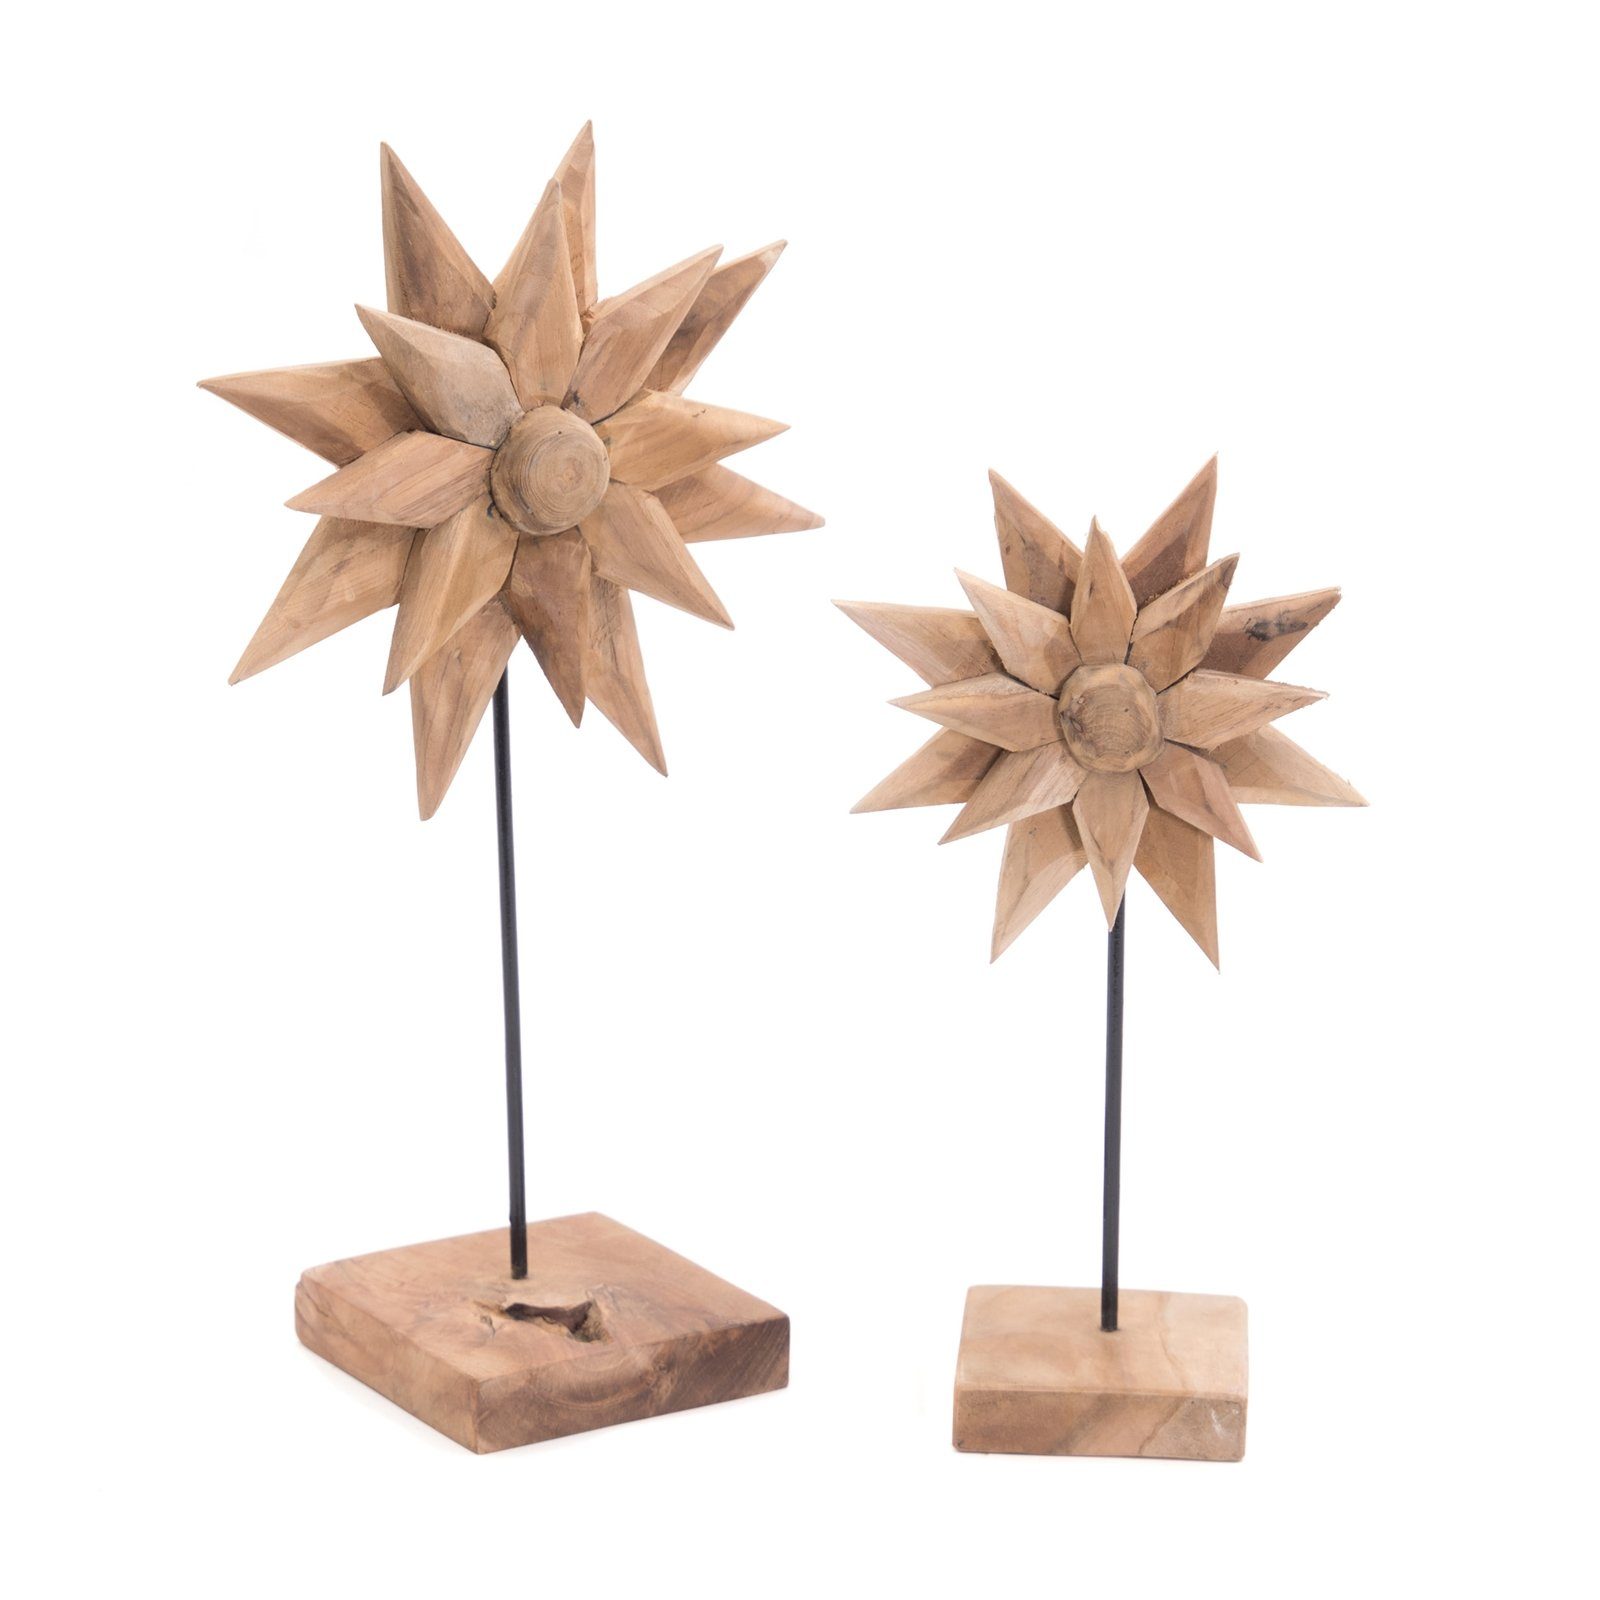 CREEDWOOD Skulptur TEAK SKULPTUR "SUNFLOWER", 2-teilig, Holz Aufsteller Blume